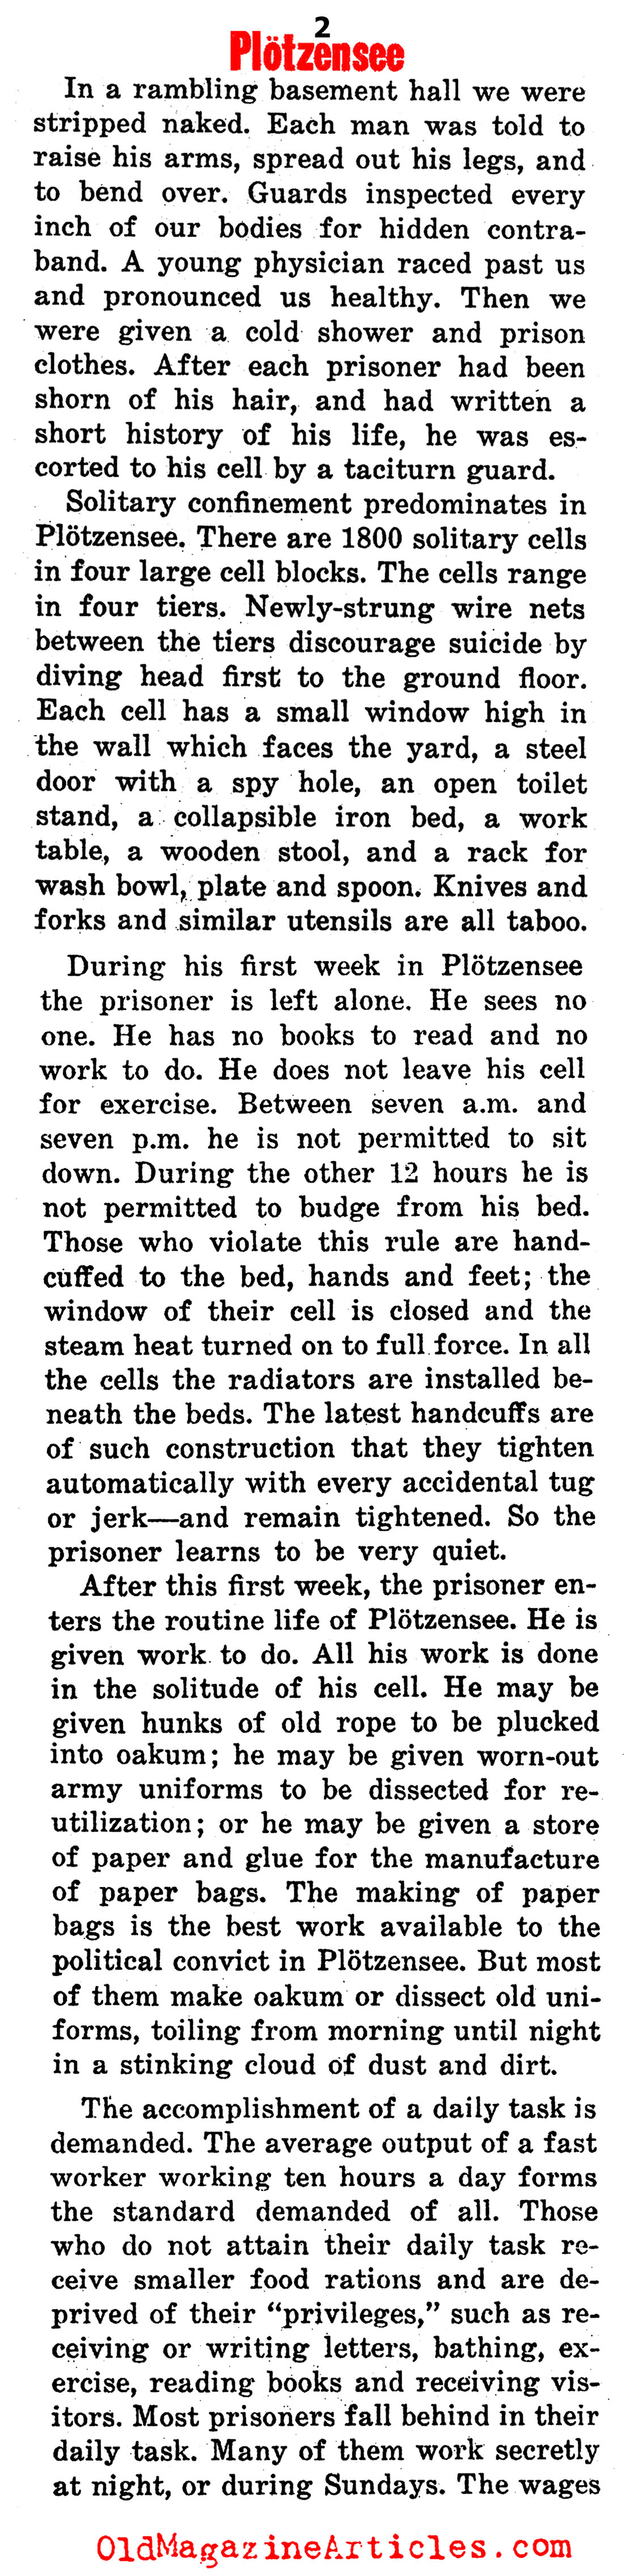 Nazi Terror at Plotzensee Prison  (Ken Magazine, 1939)